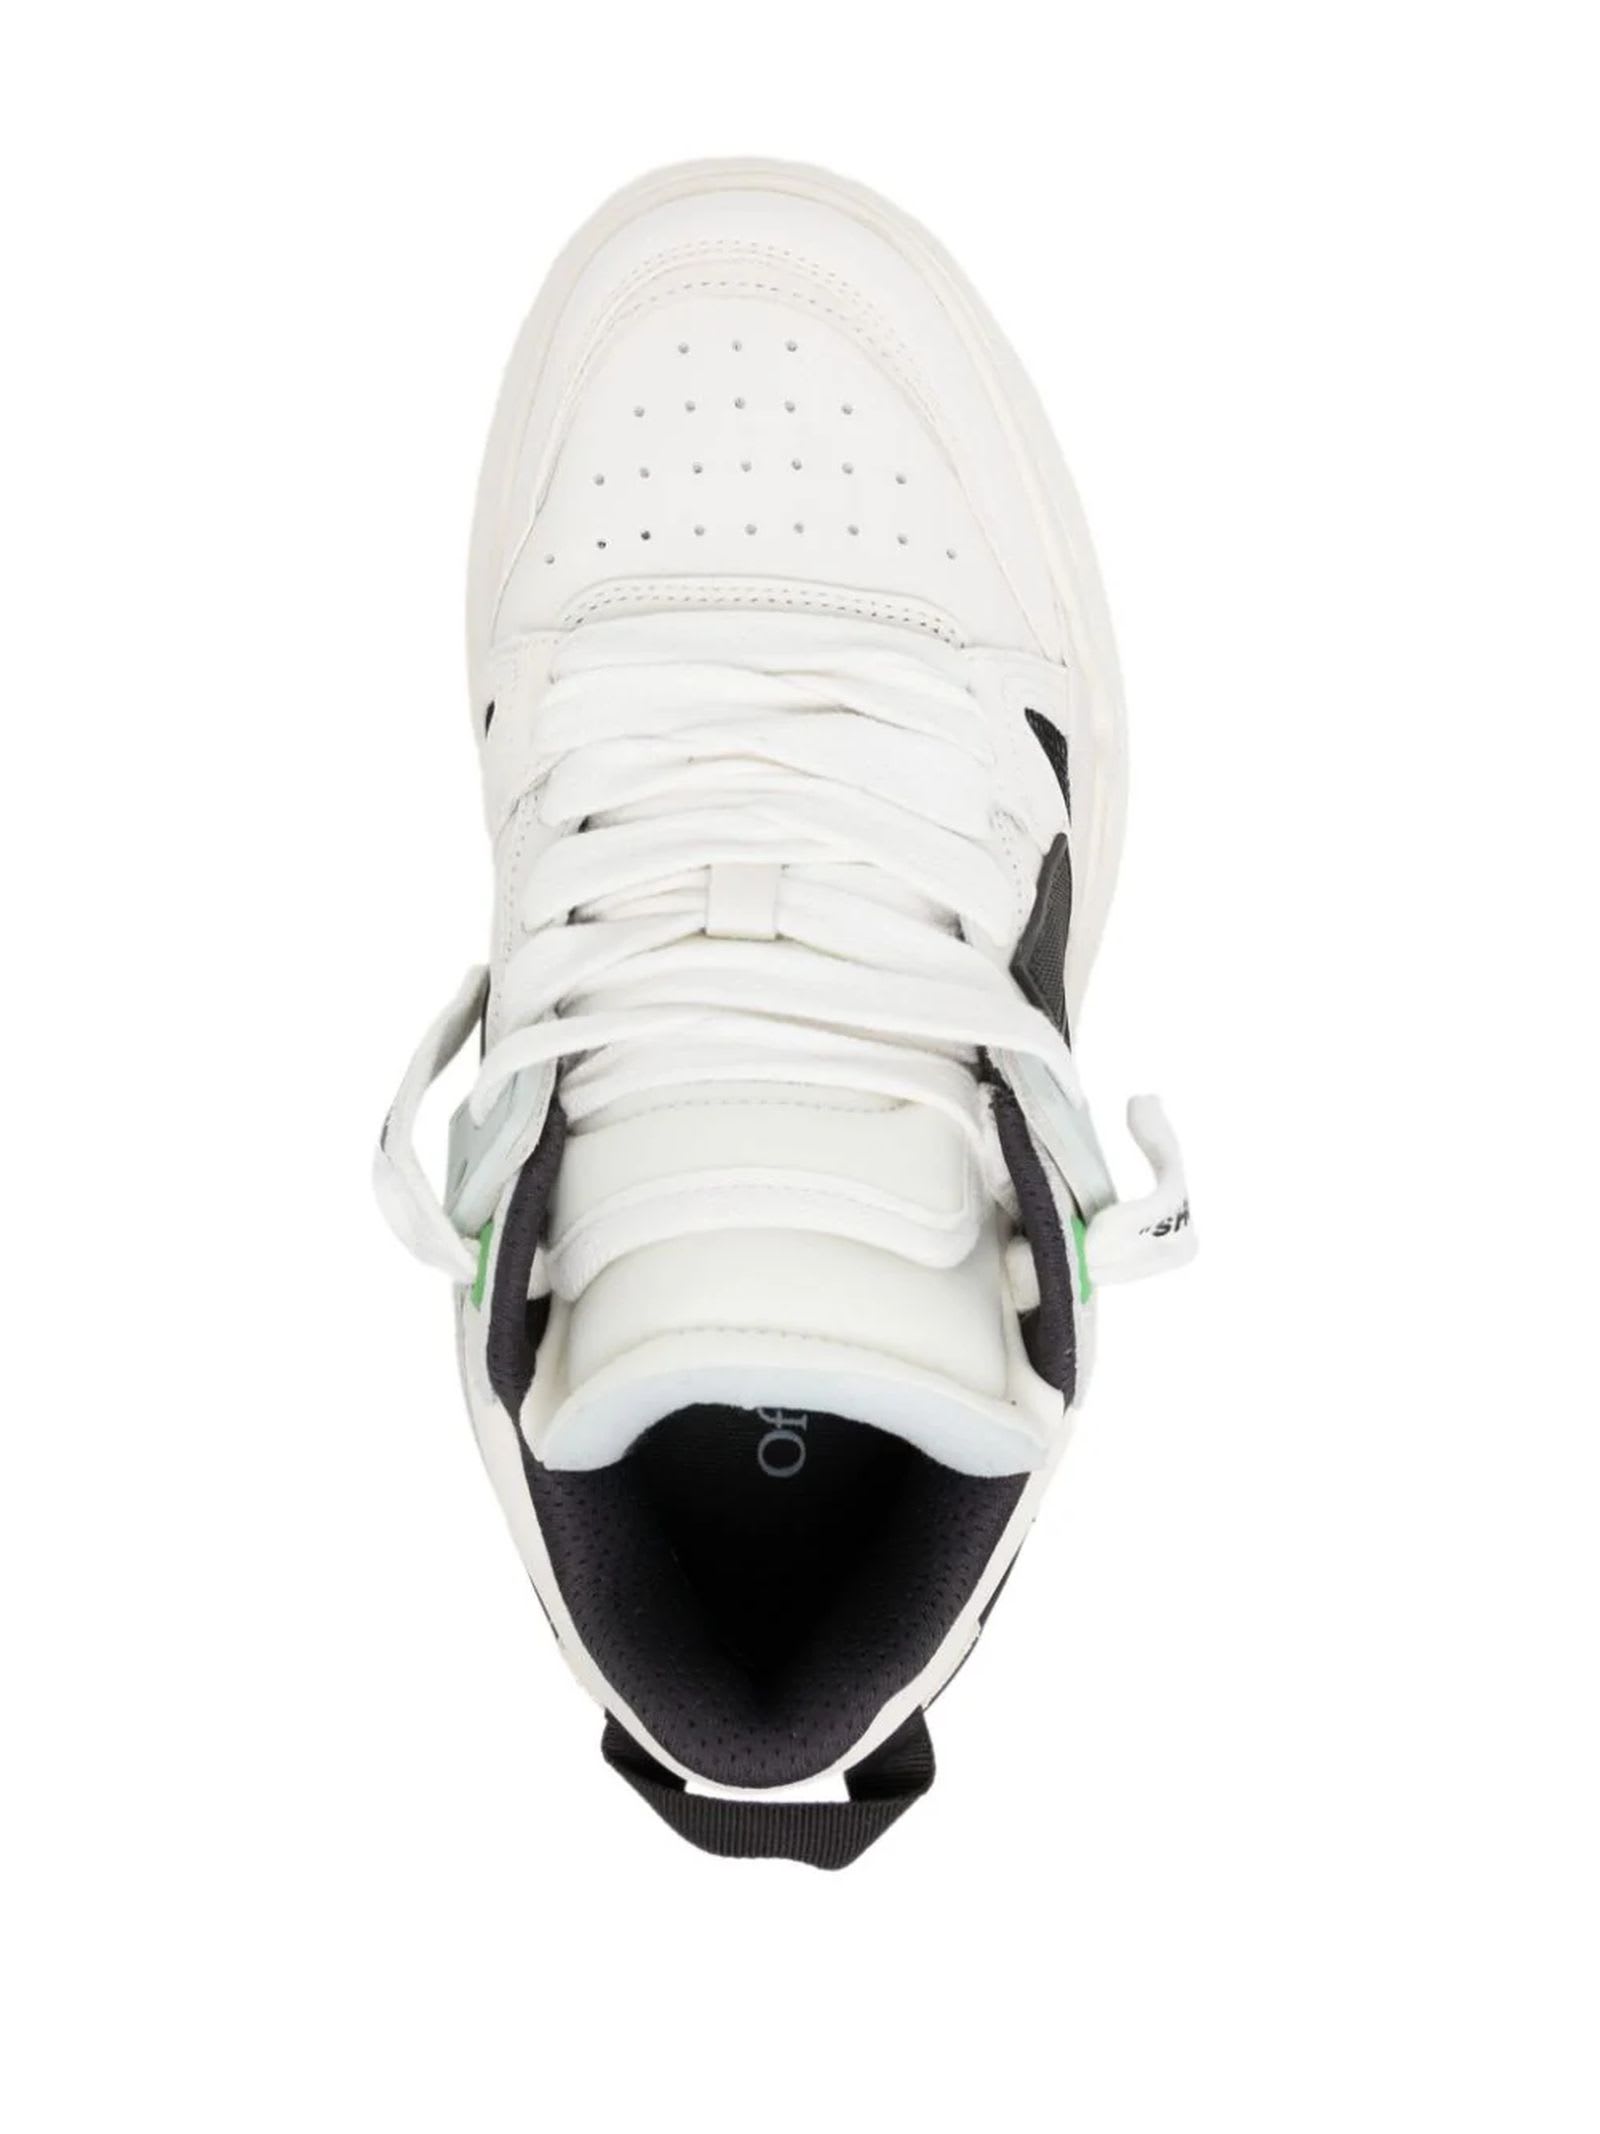 New Midtop Sponge Leather Sneaker - White - Off-White c/o Virgil Abloh  Sneakers - Yahoo Shopping